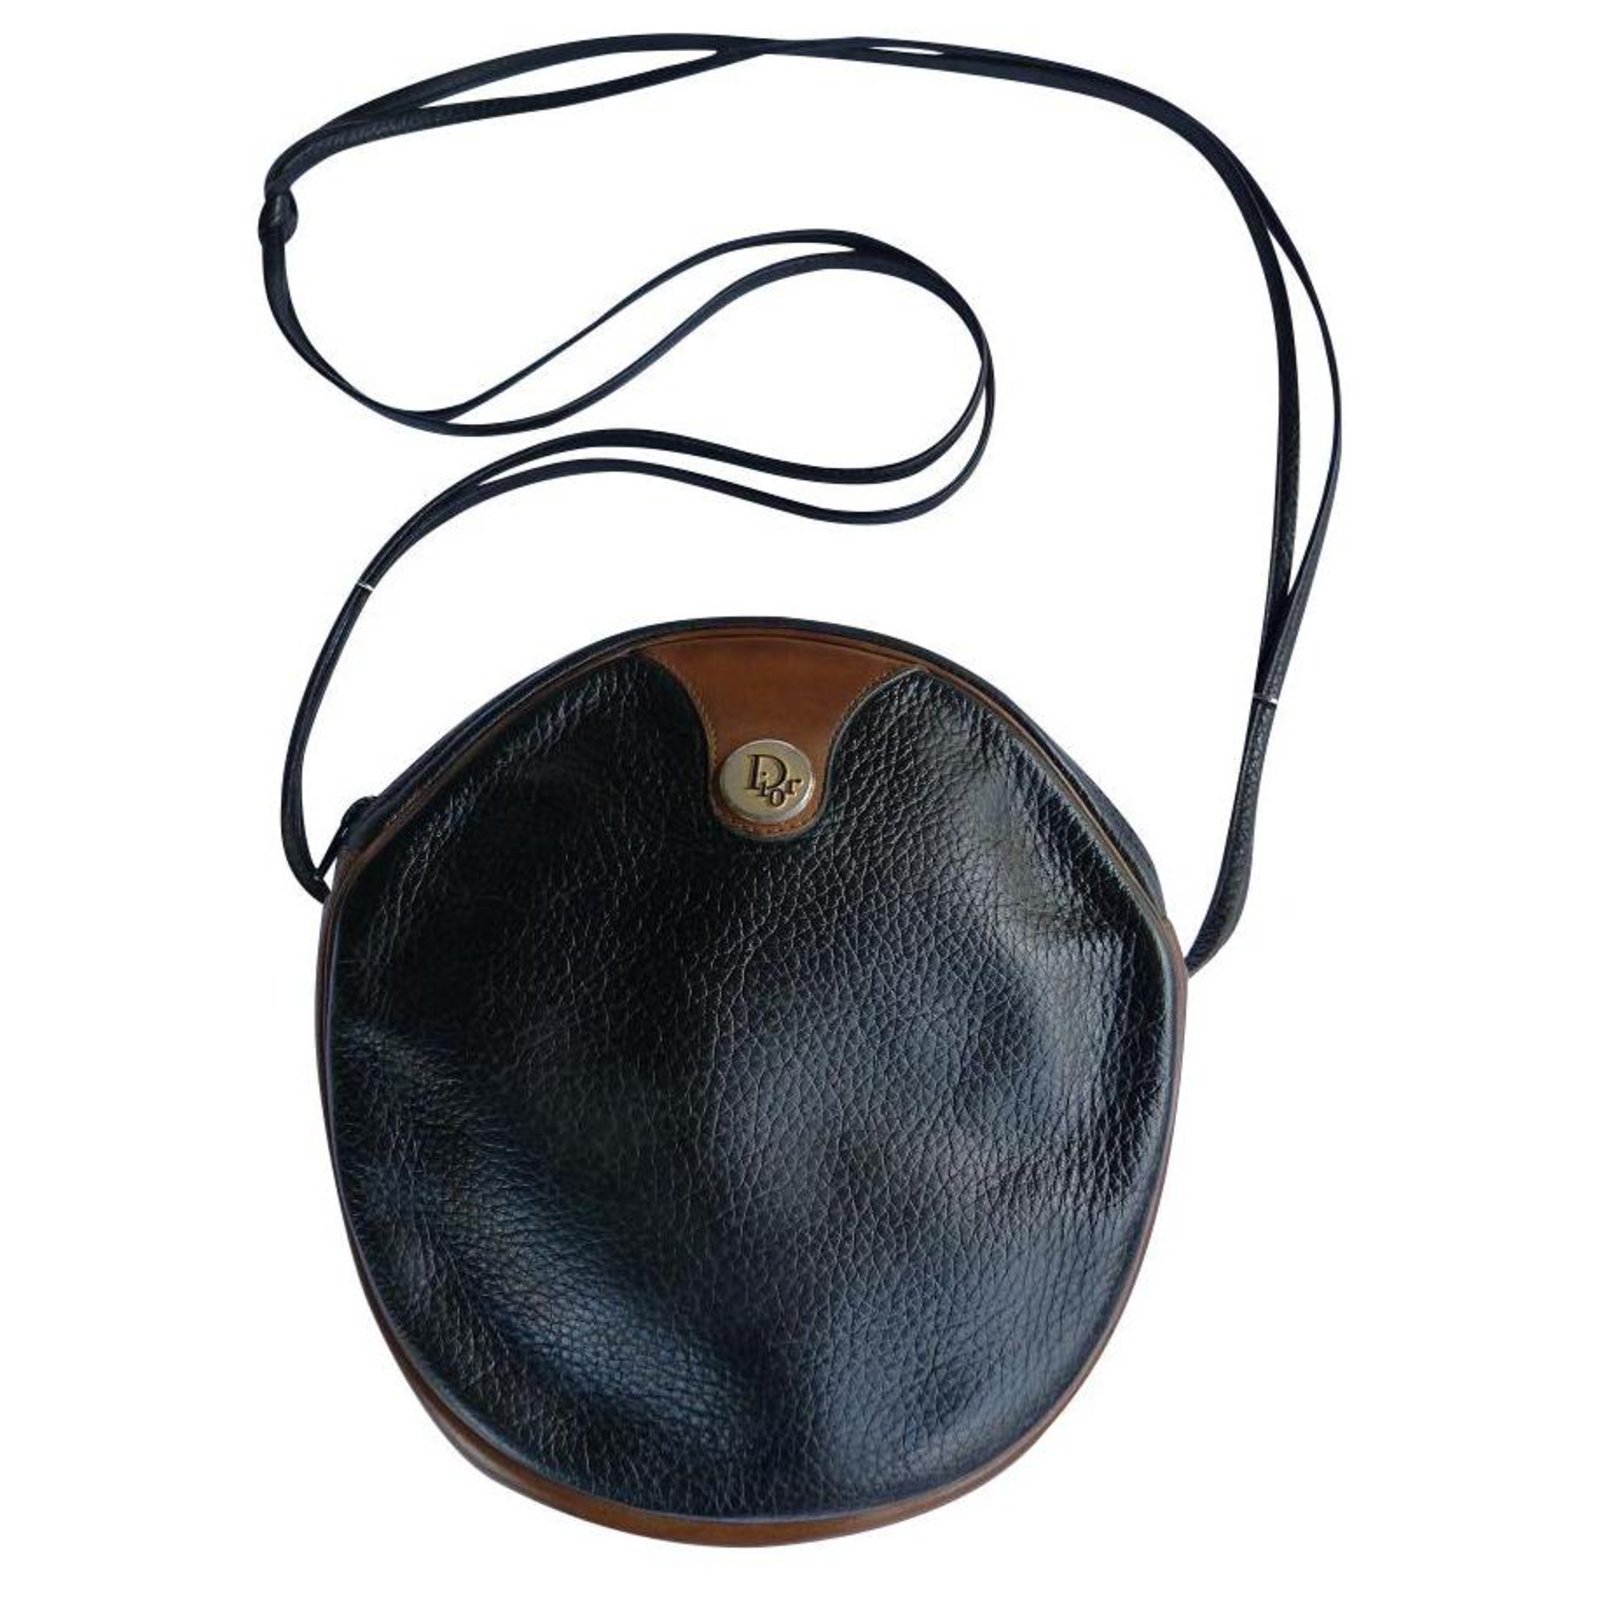 Dior Vintage - Leather Handbag Bag - Brown - Leather Handbag